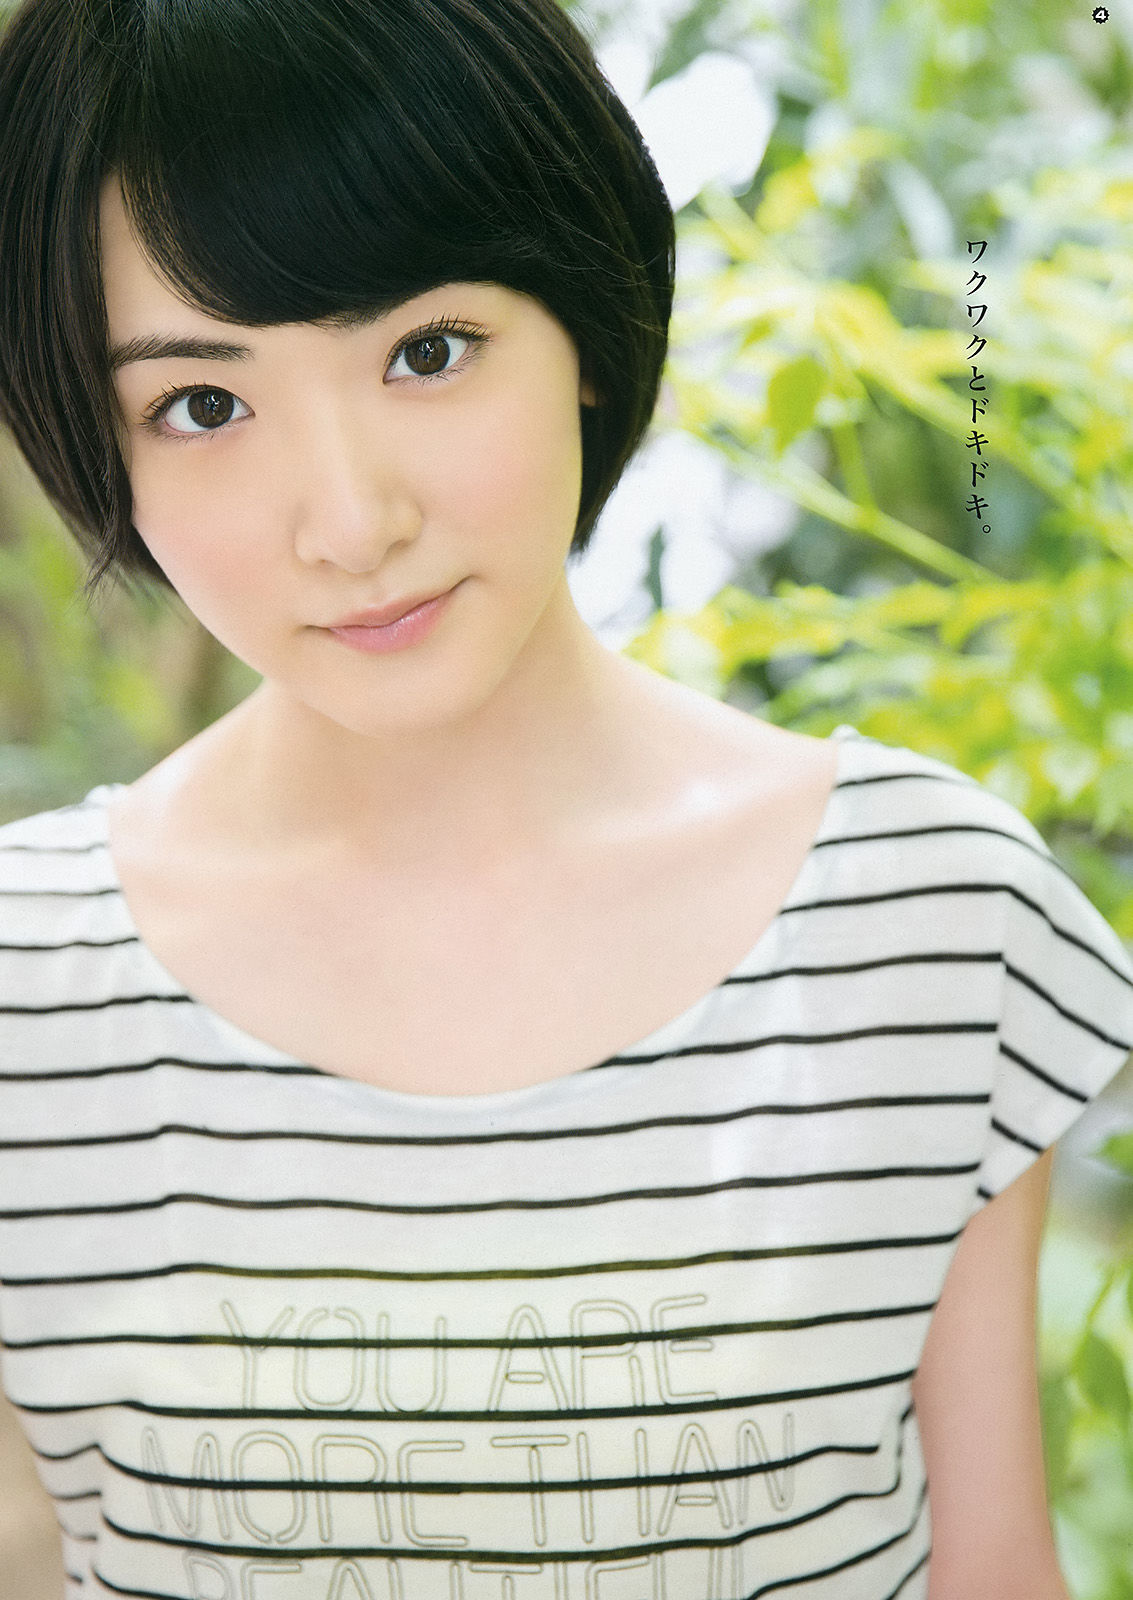 [Gangan Muda] Rina Ikoma, Mikami, Sayuri Inoue 2015 Majalah Foto No. 13